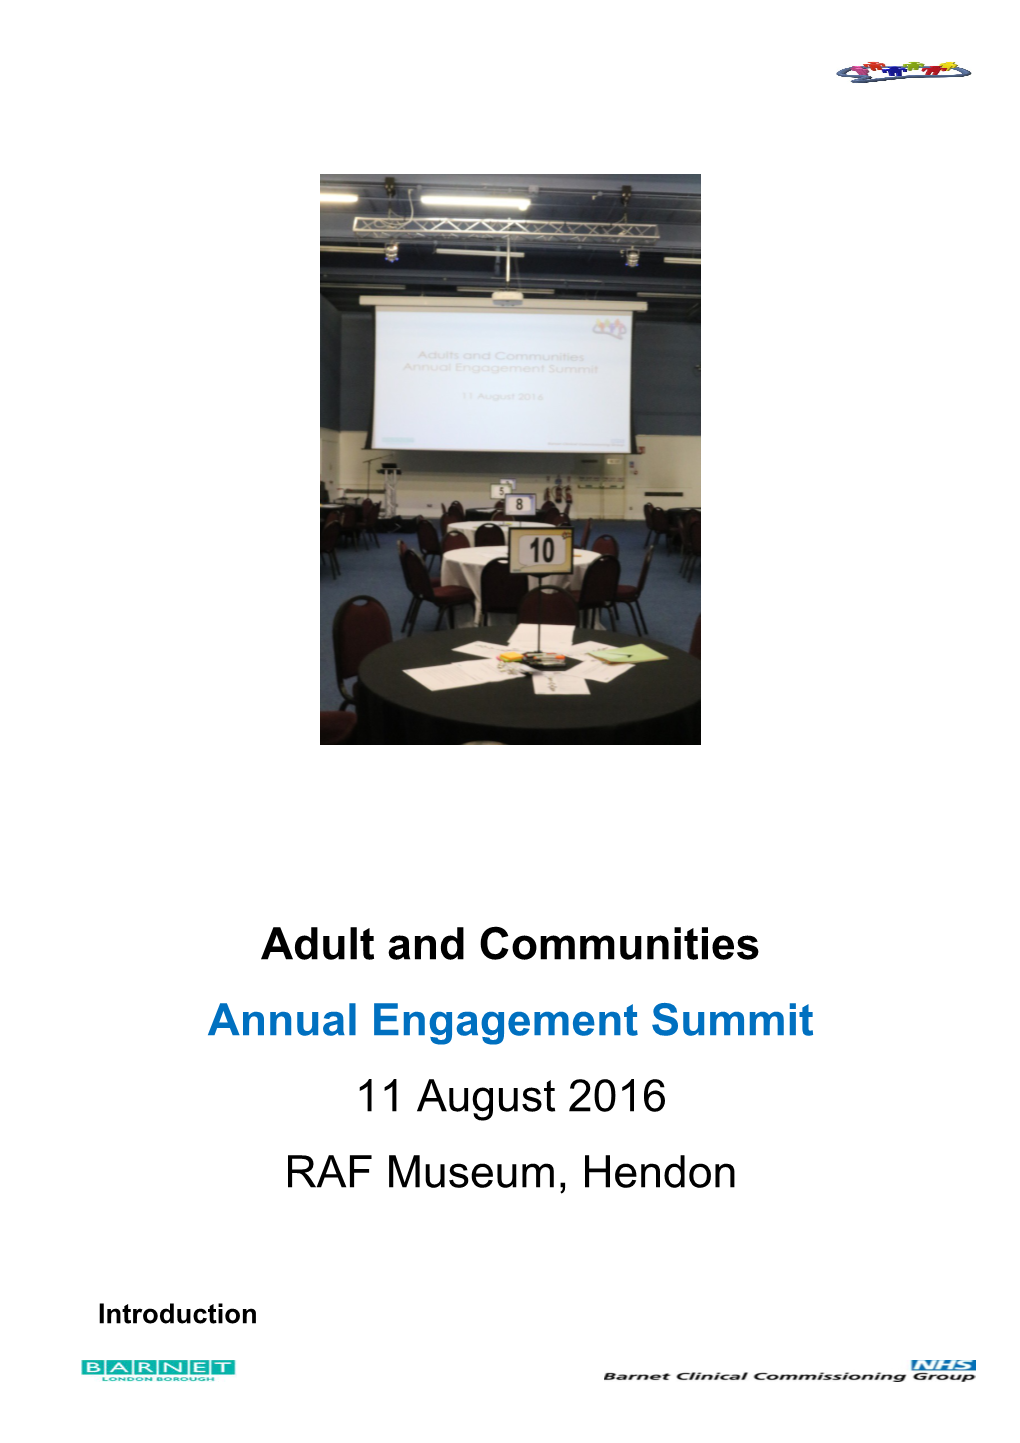 Annual Engagement Summit